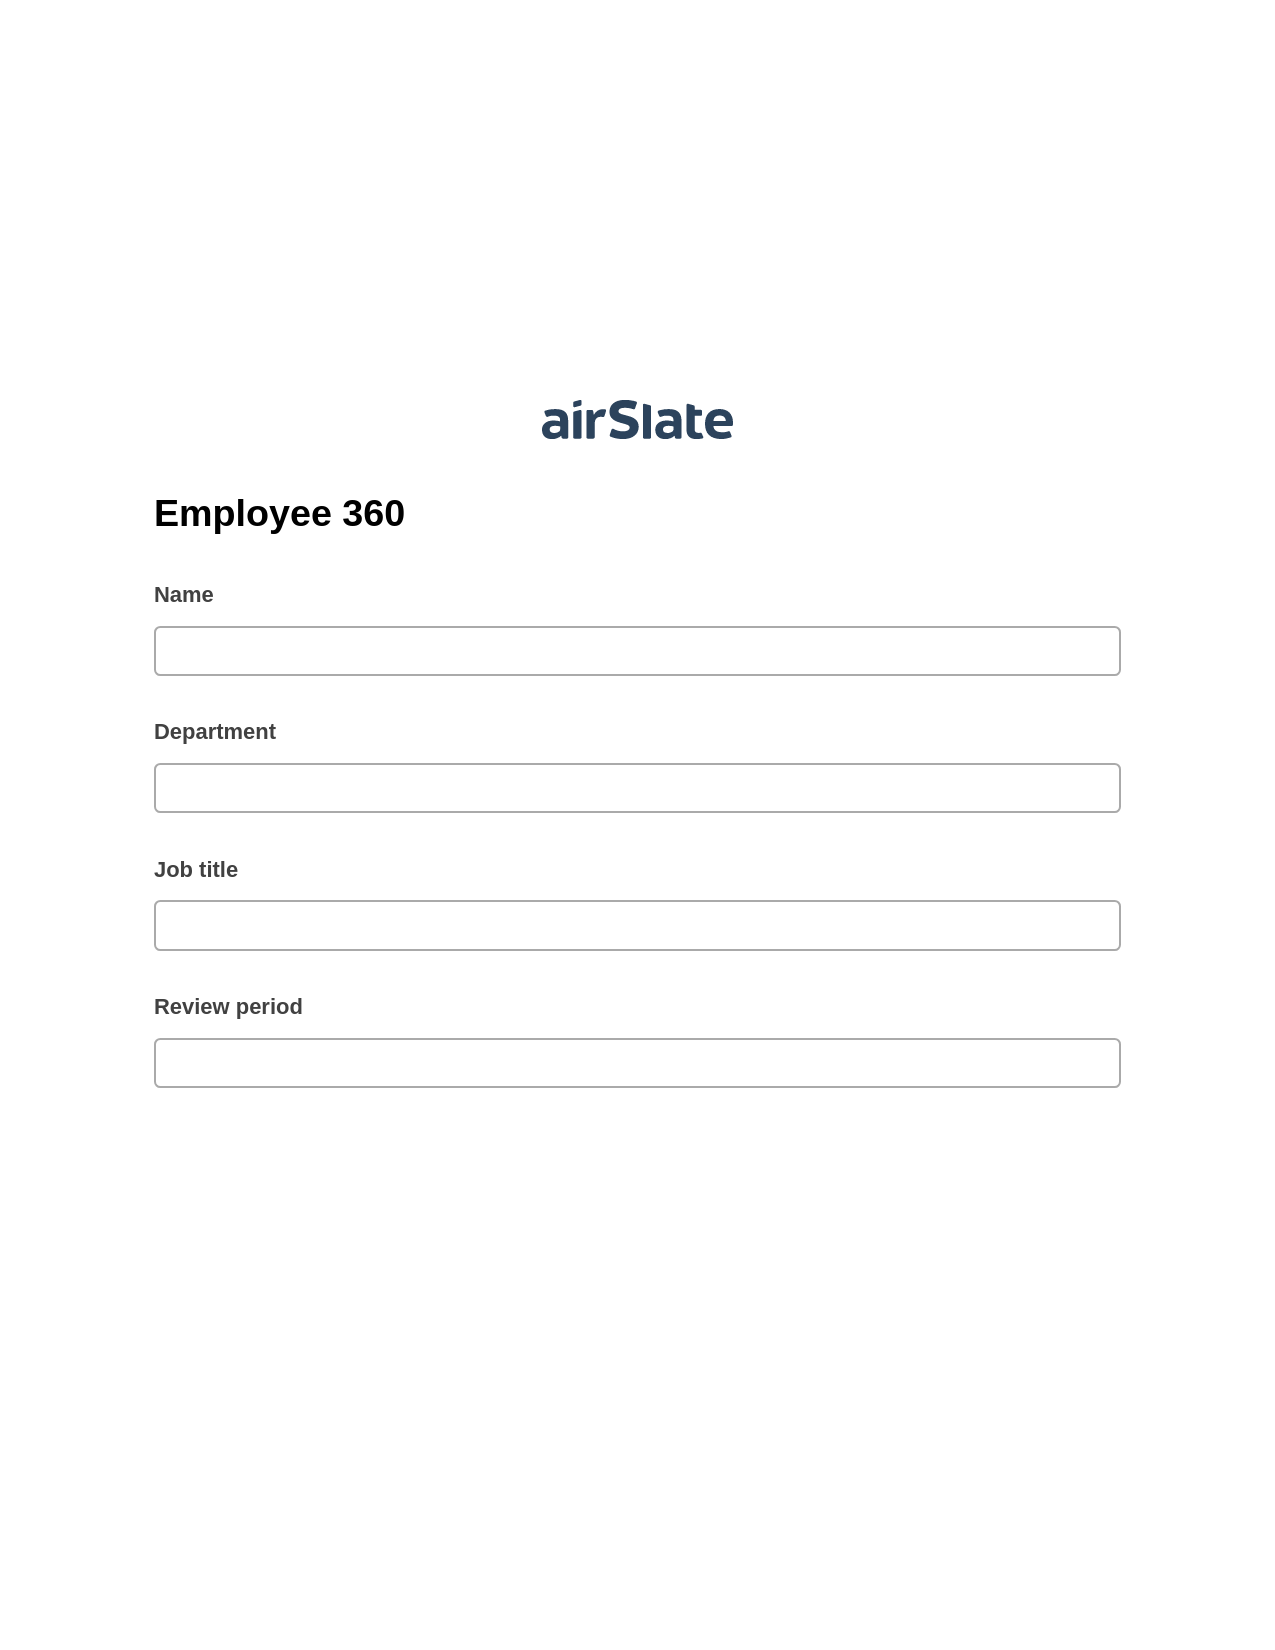 Multirole Employee 360 Pre-fill from Salesforce Records Bot, Google Calendar Bot, Webhook Postfinish Bot